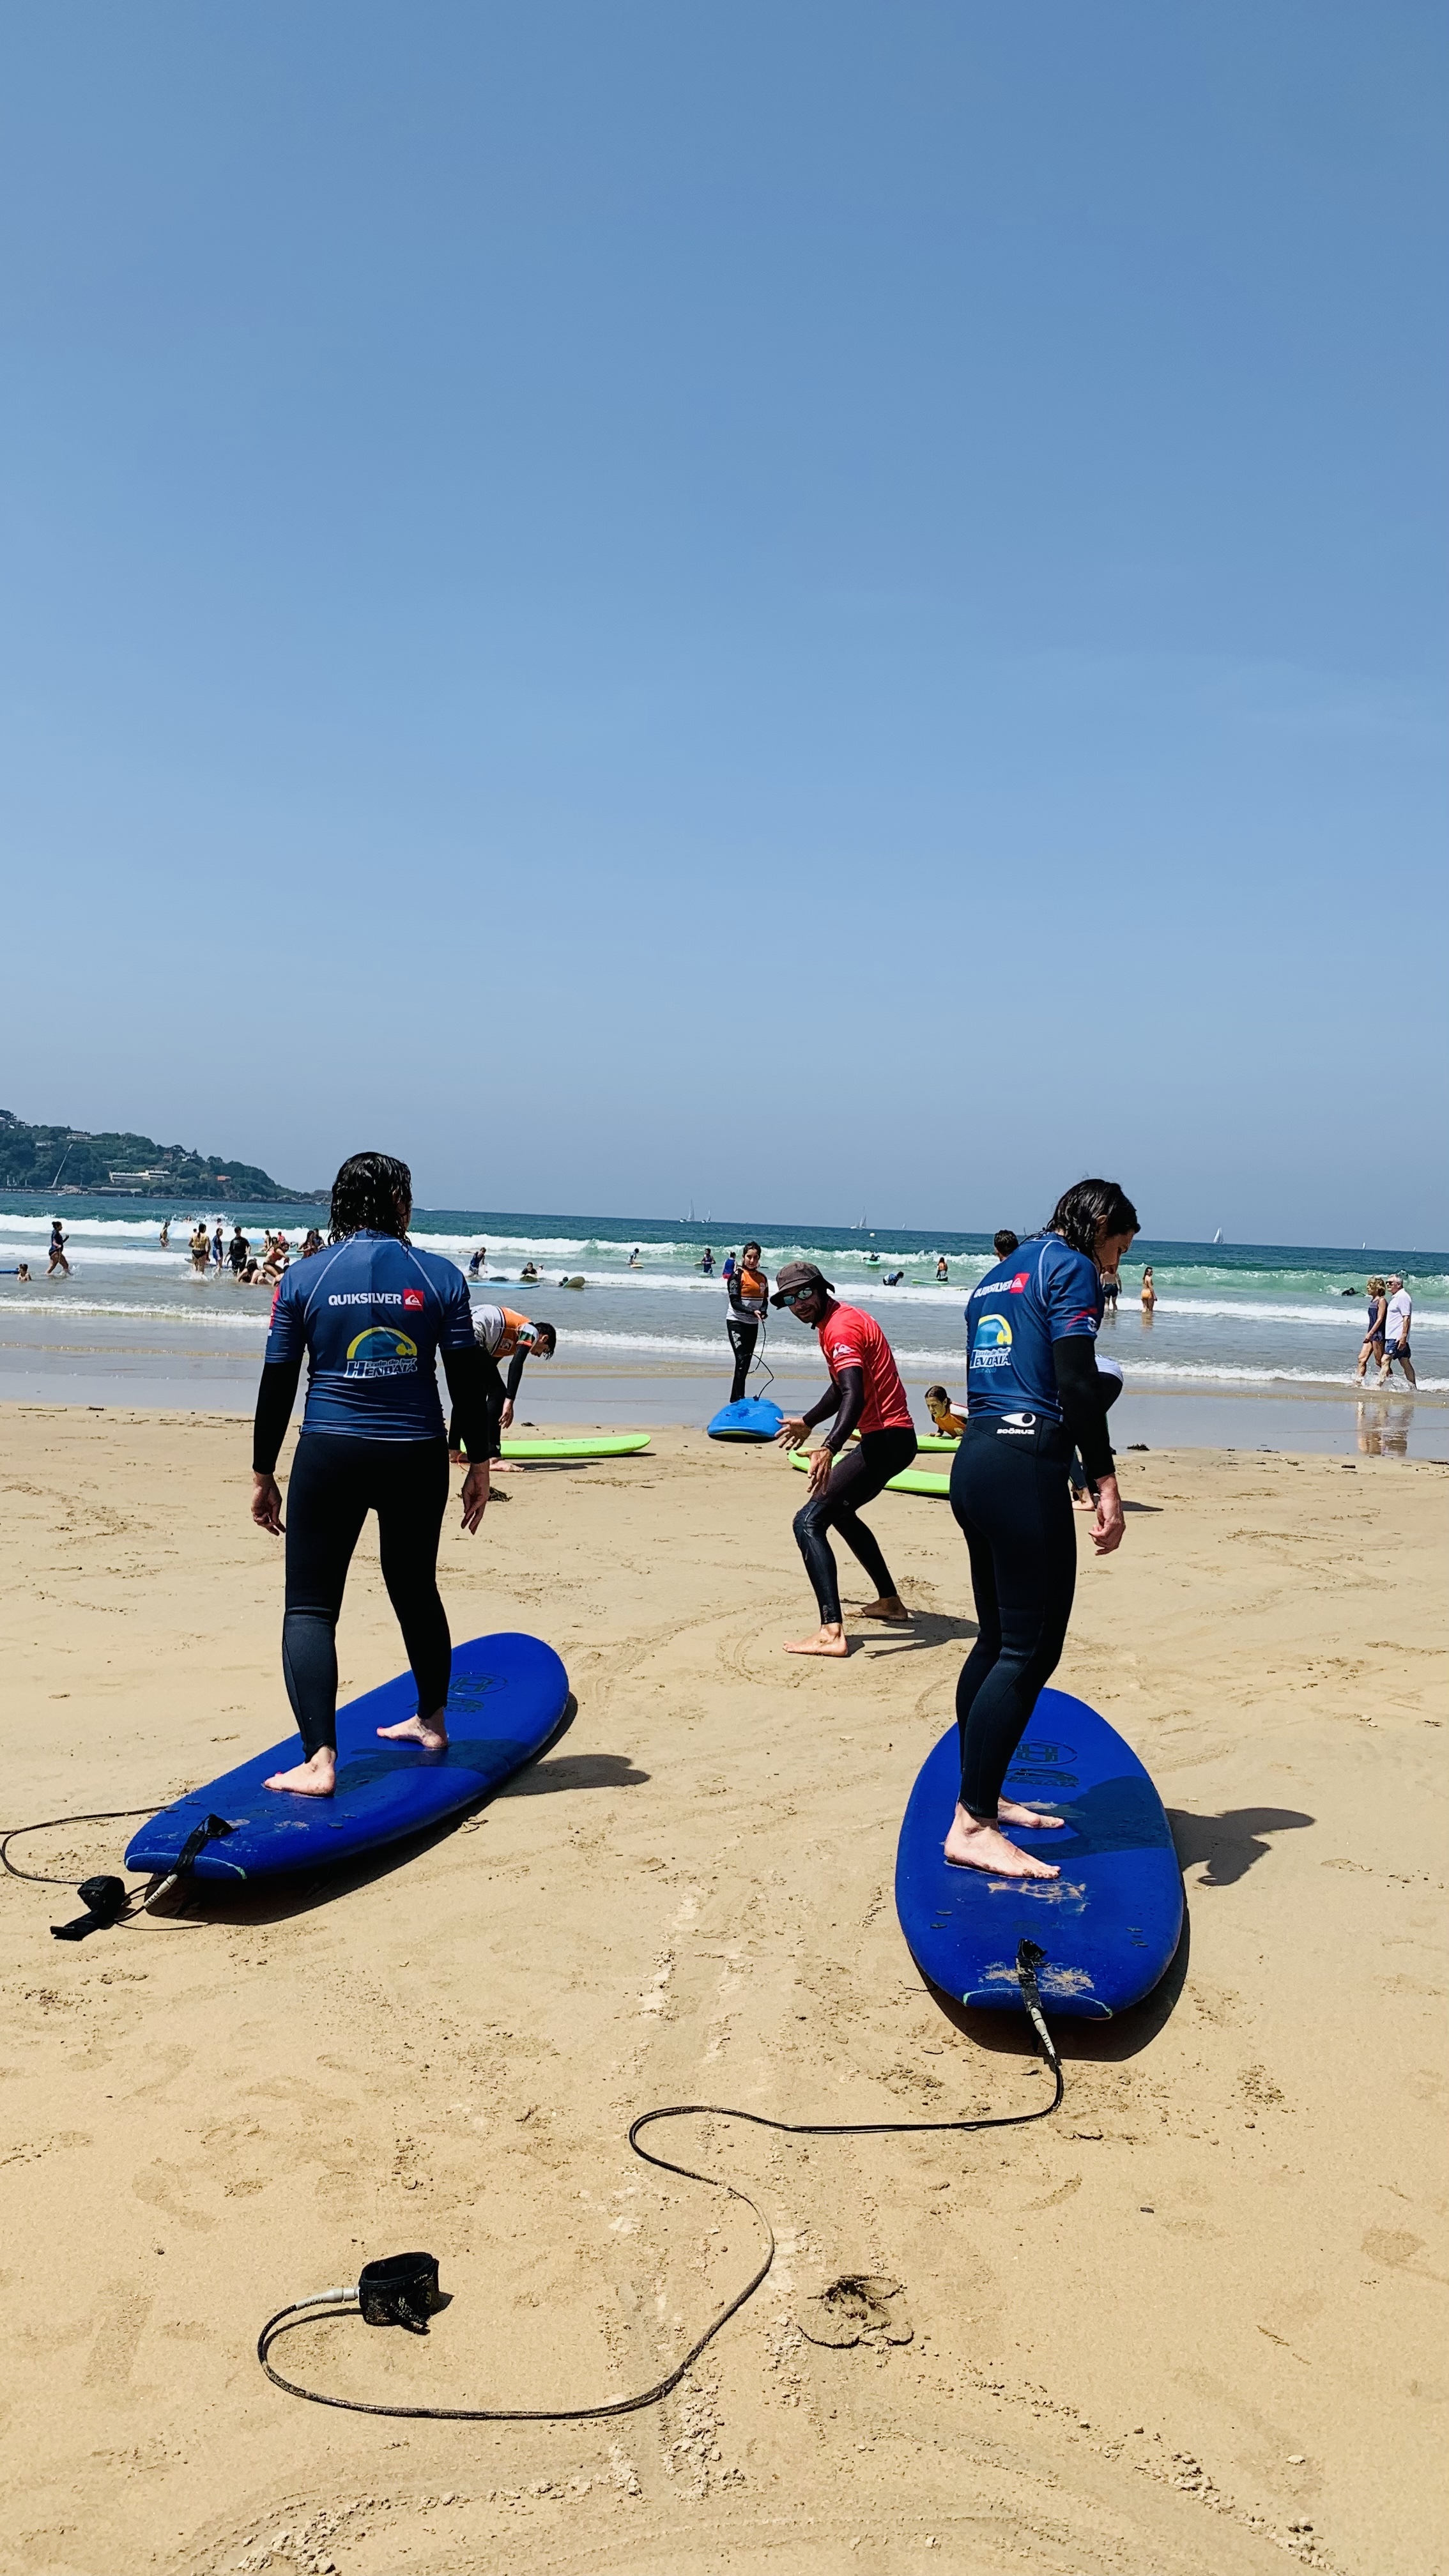 Así se enseña surf en Hendaya